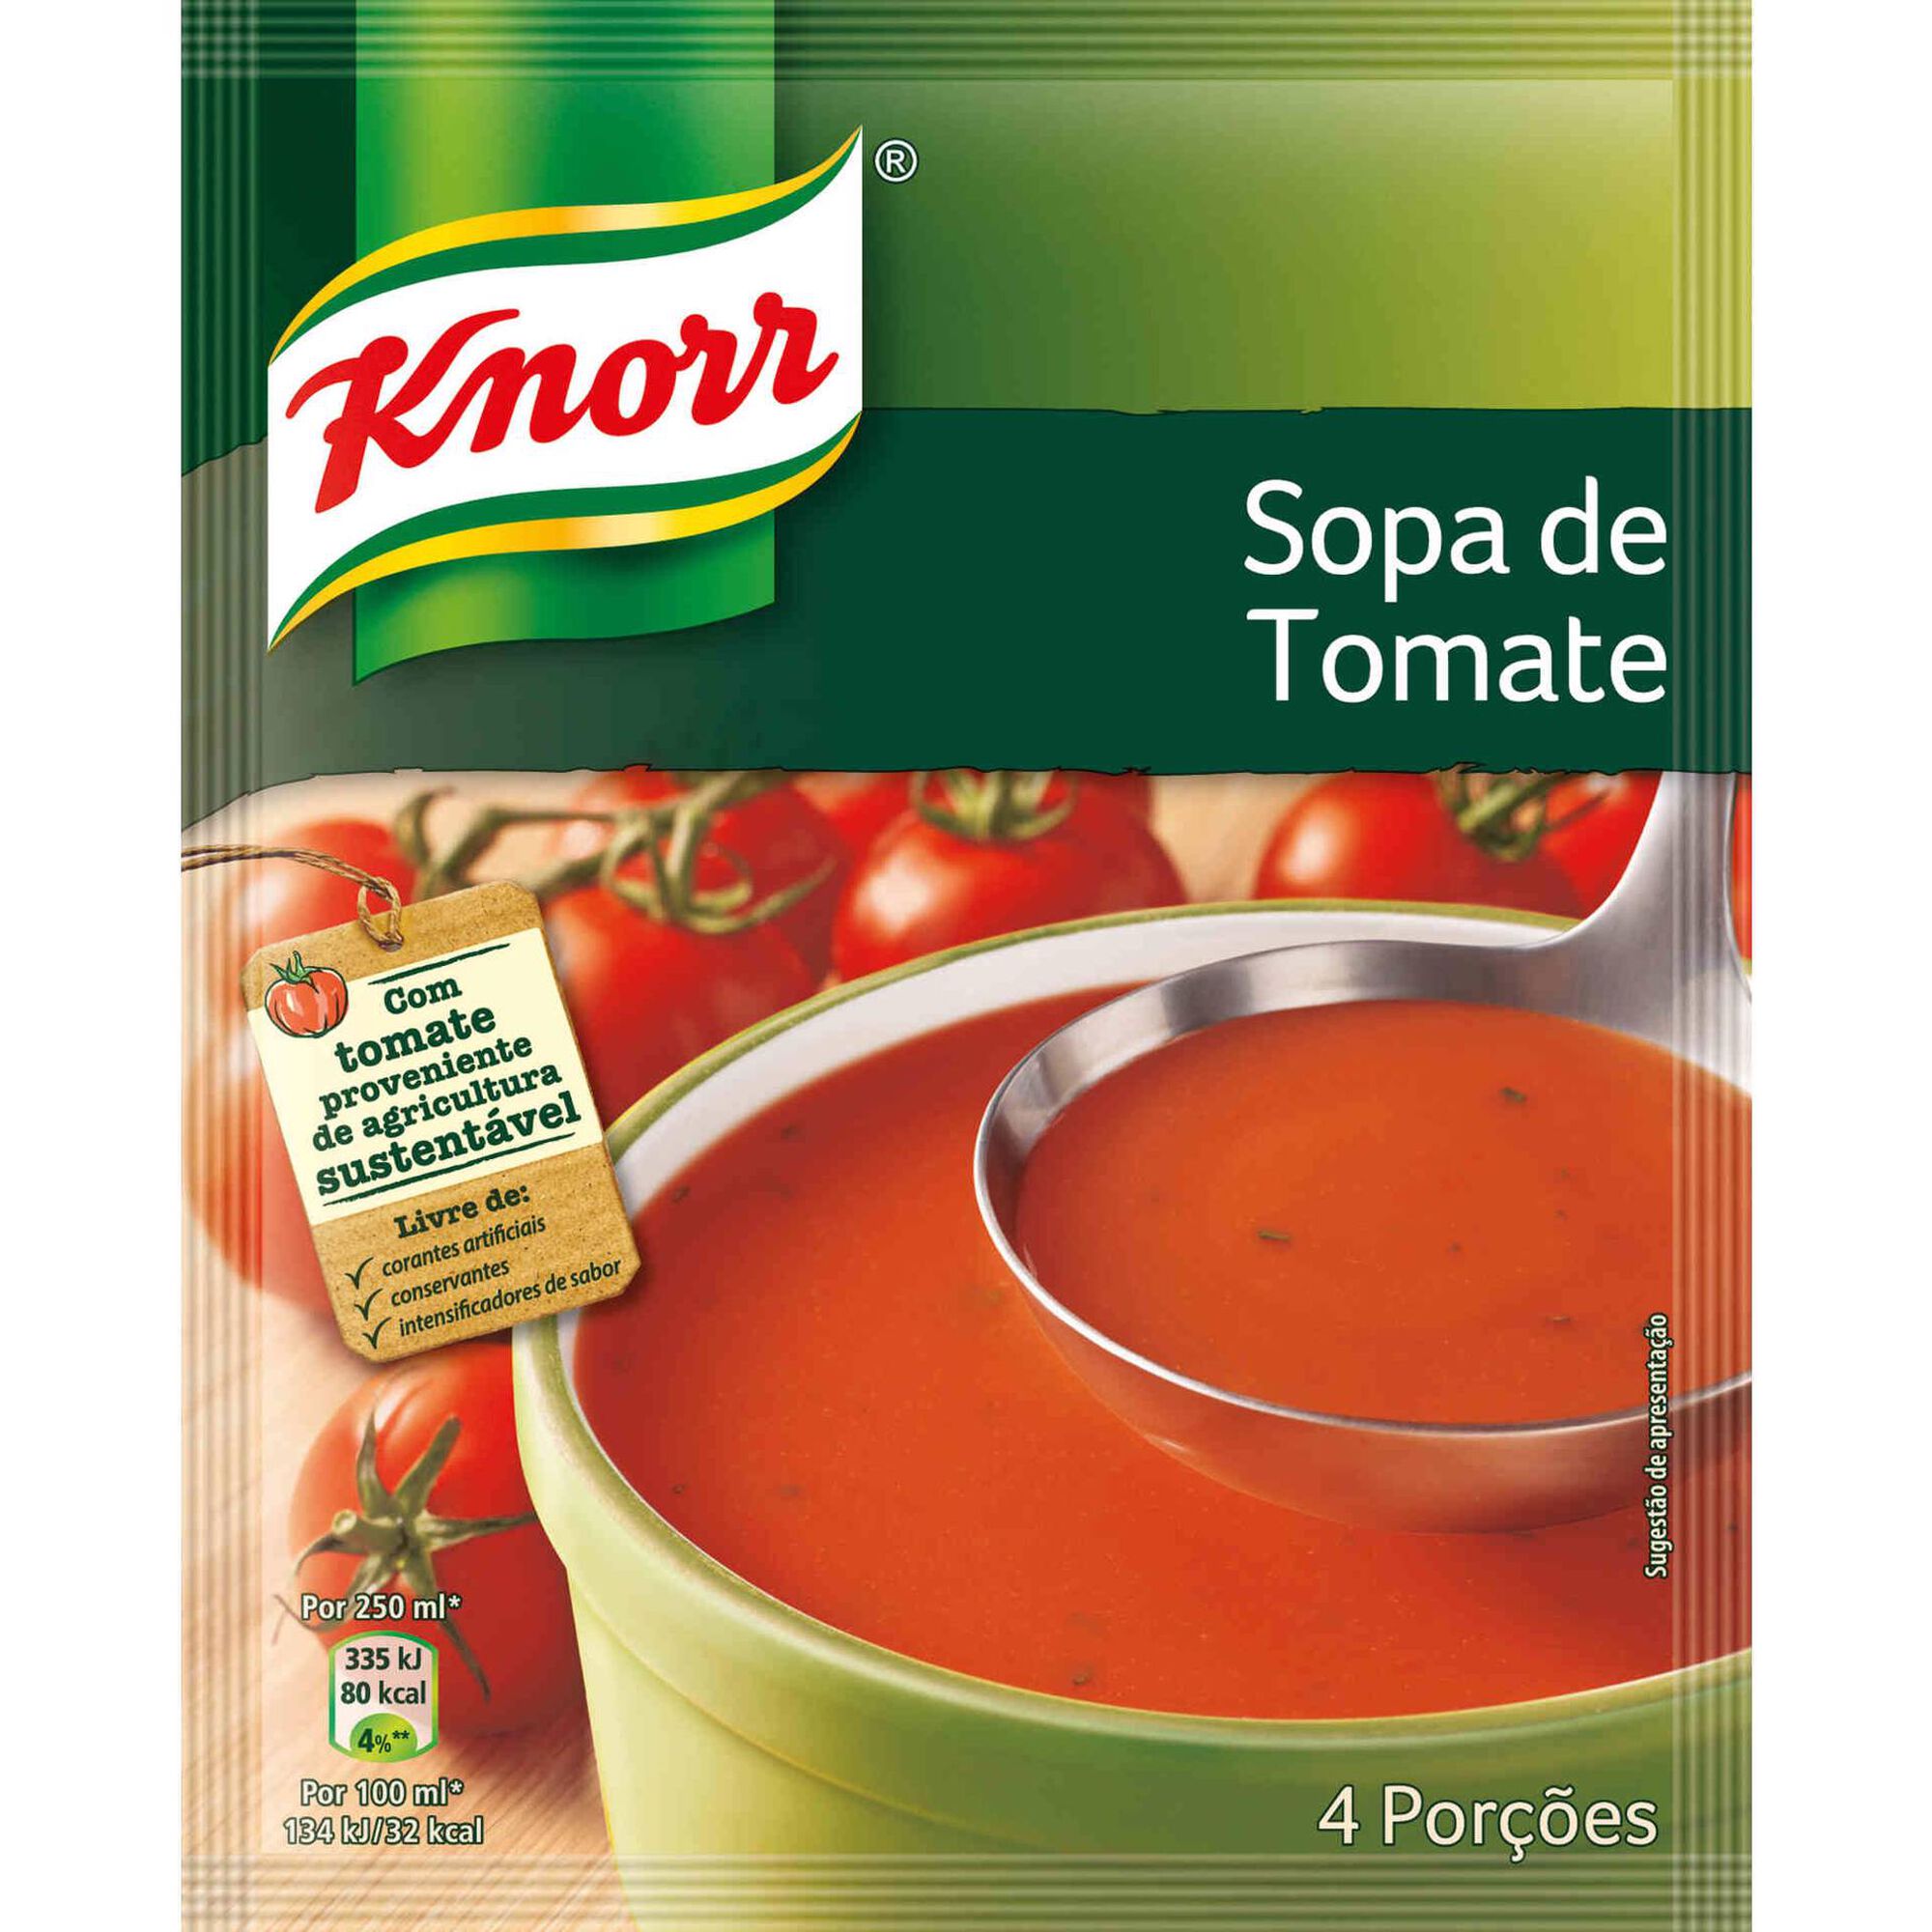 Sopa de Tomate Knorr